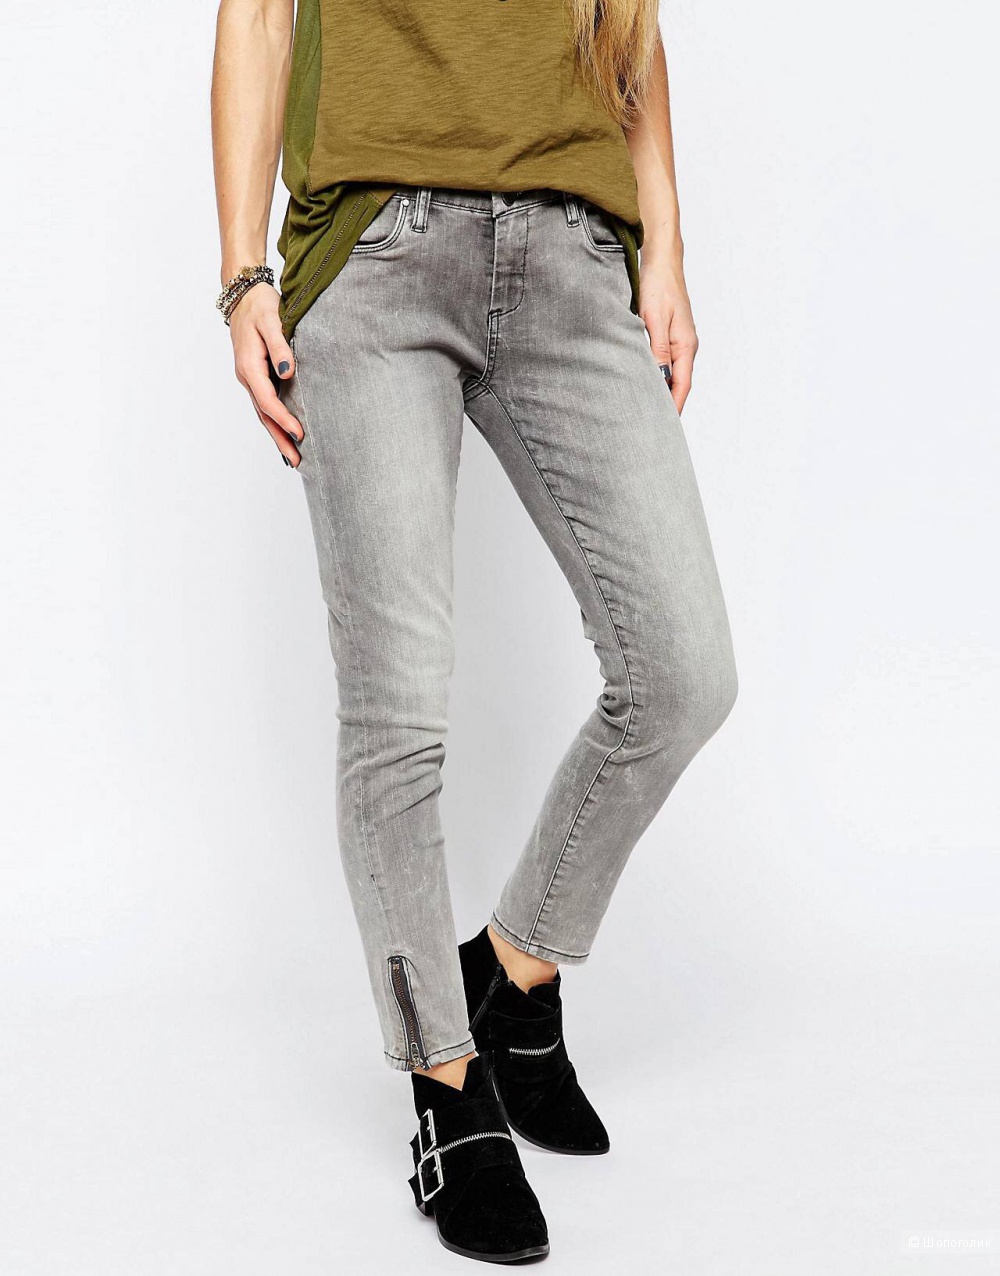 Новые джинсы Blanc NYC Morning, 27 размер